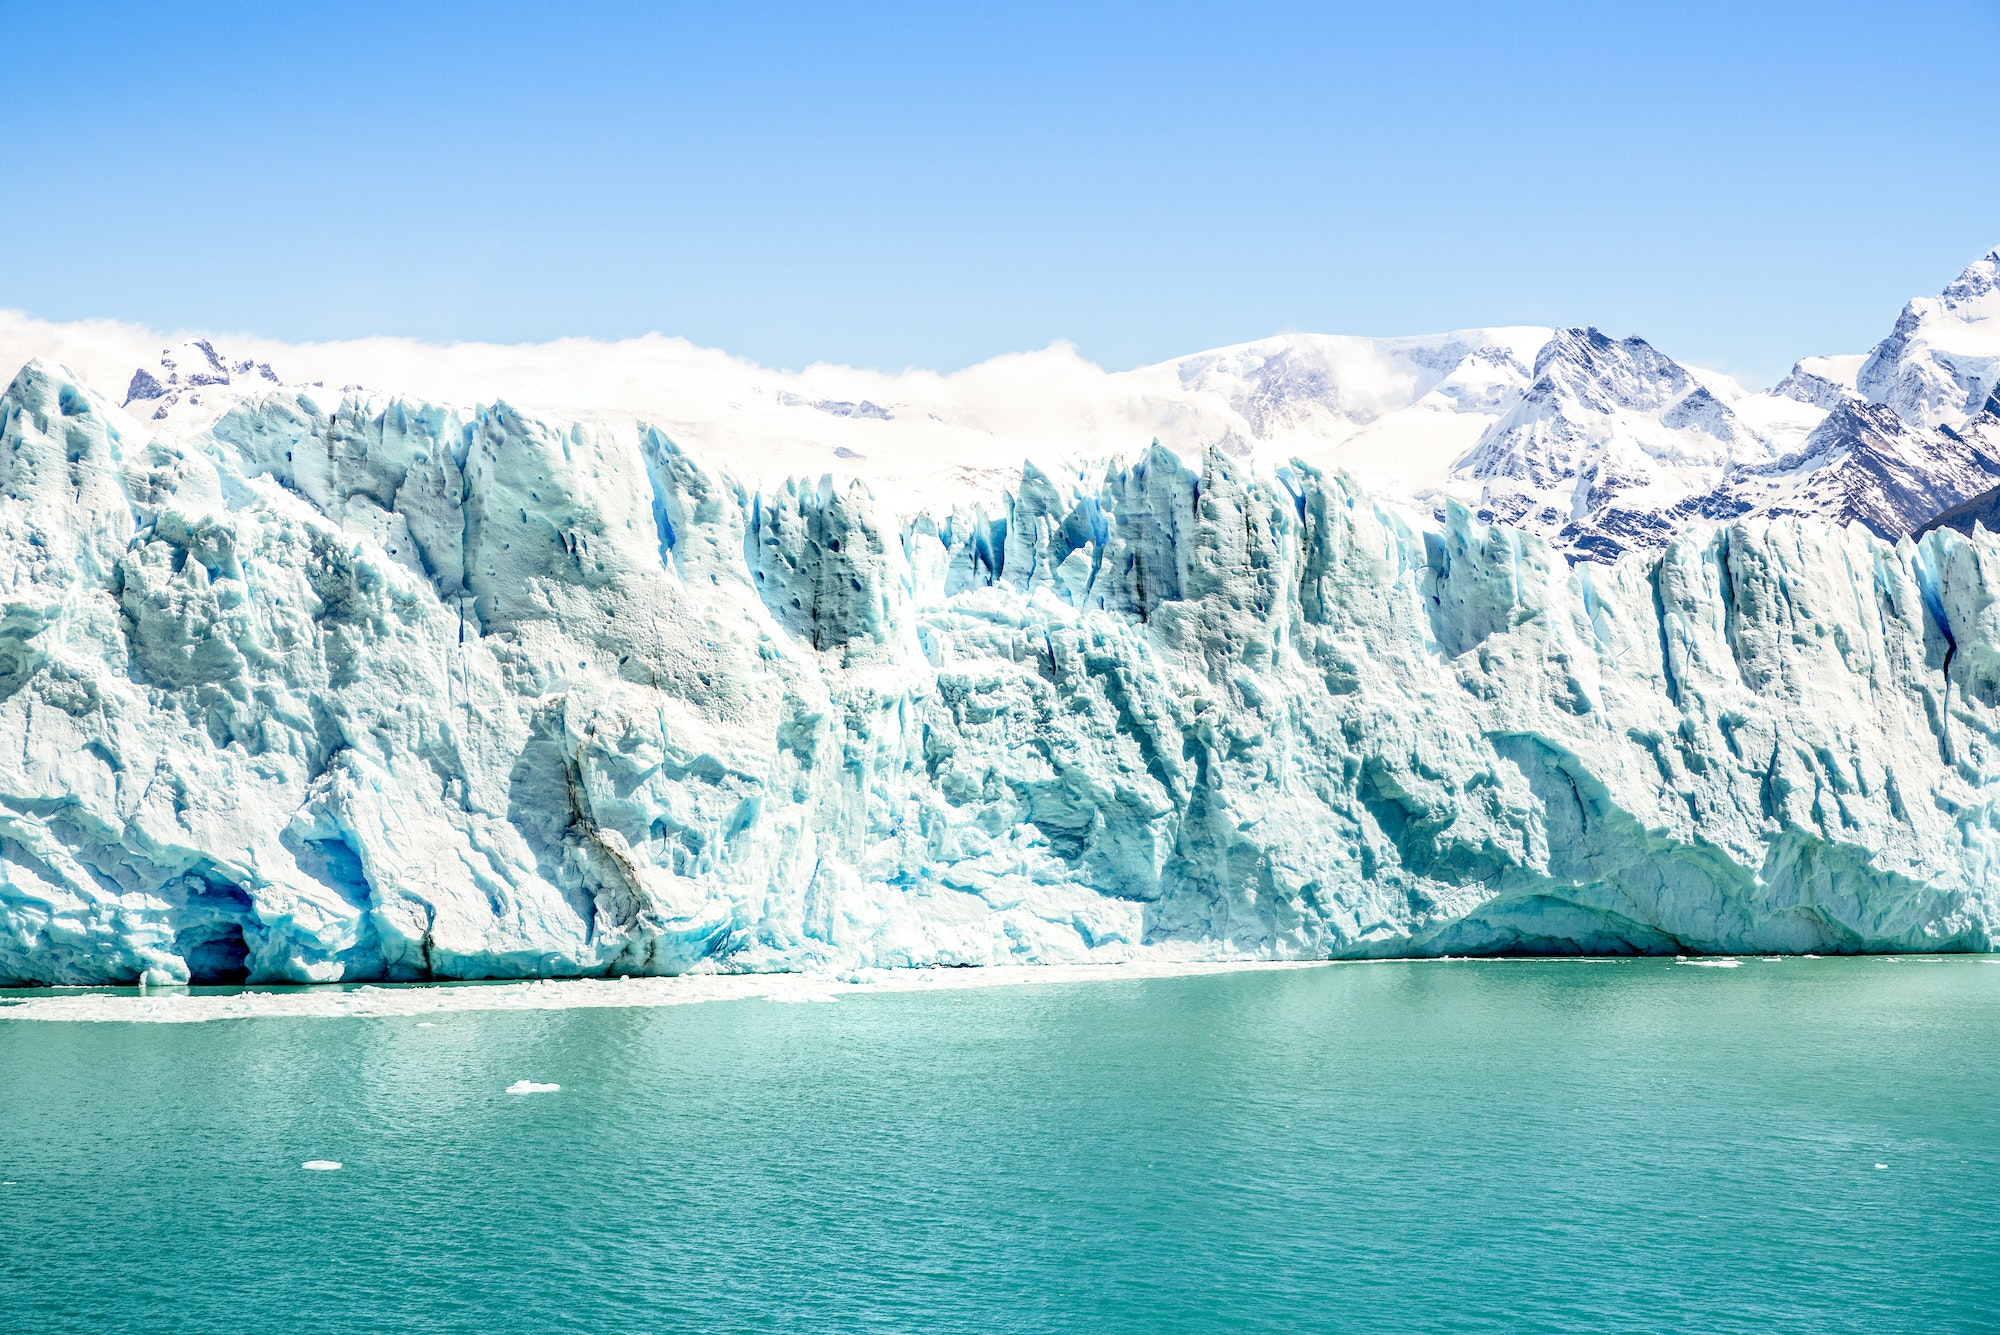 Frontal detailed view of Perito Moreno glaciar in argentinian Patagonia